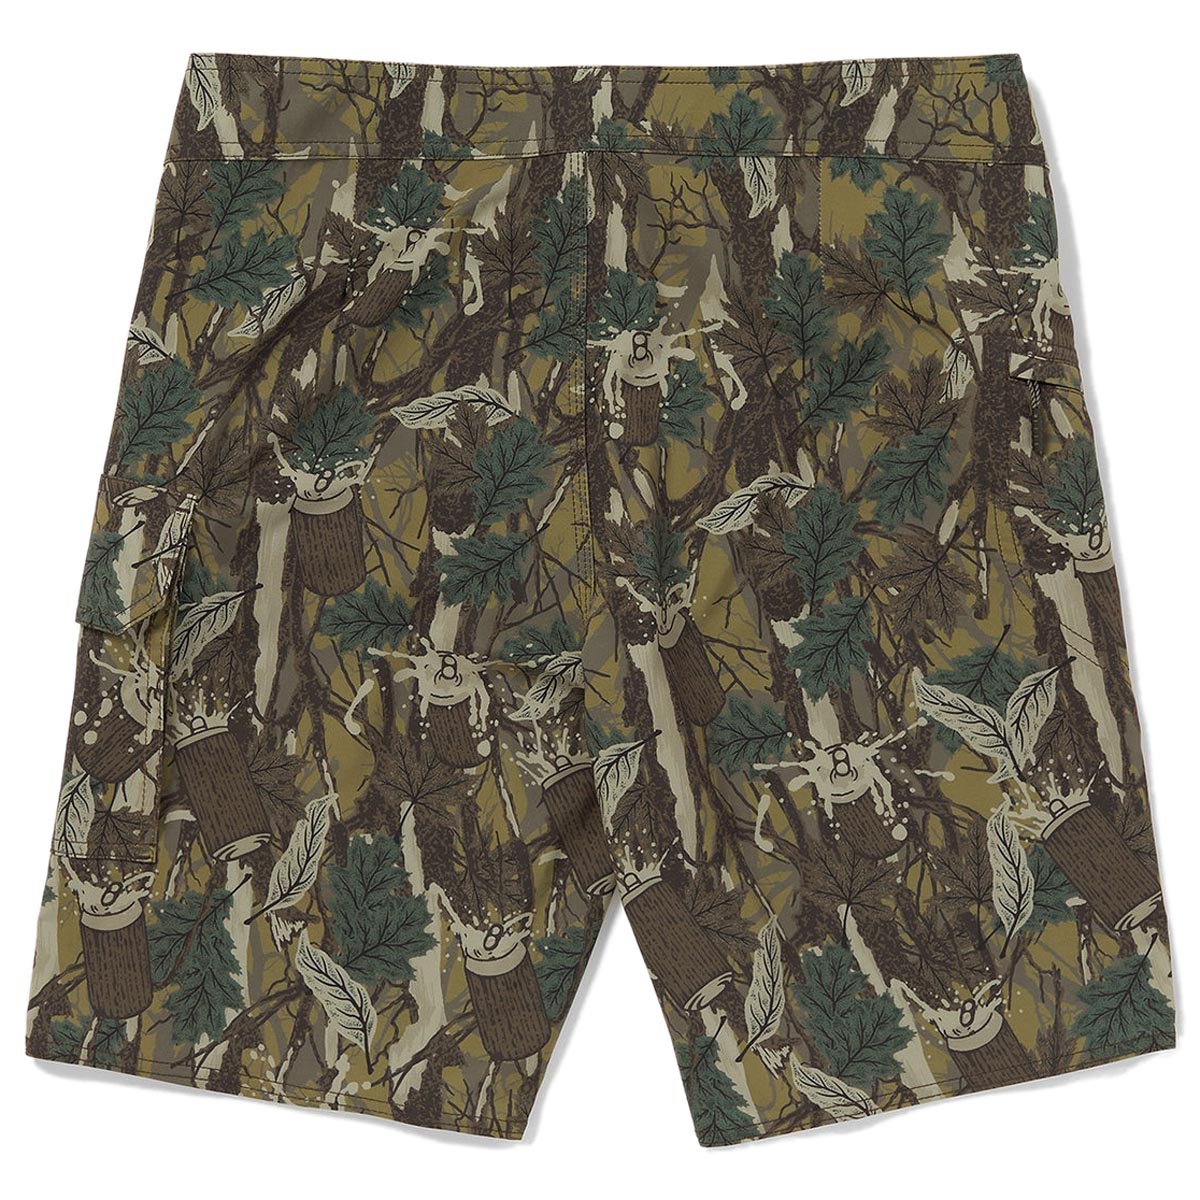 Volcom Stone Of July Mod 20 Board Shorts - Camouflage image 2